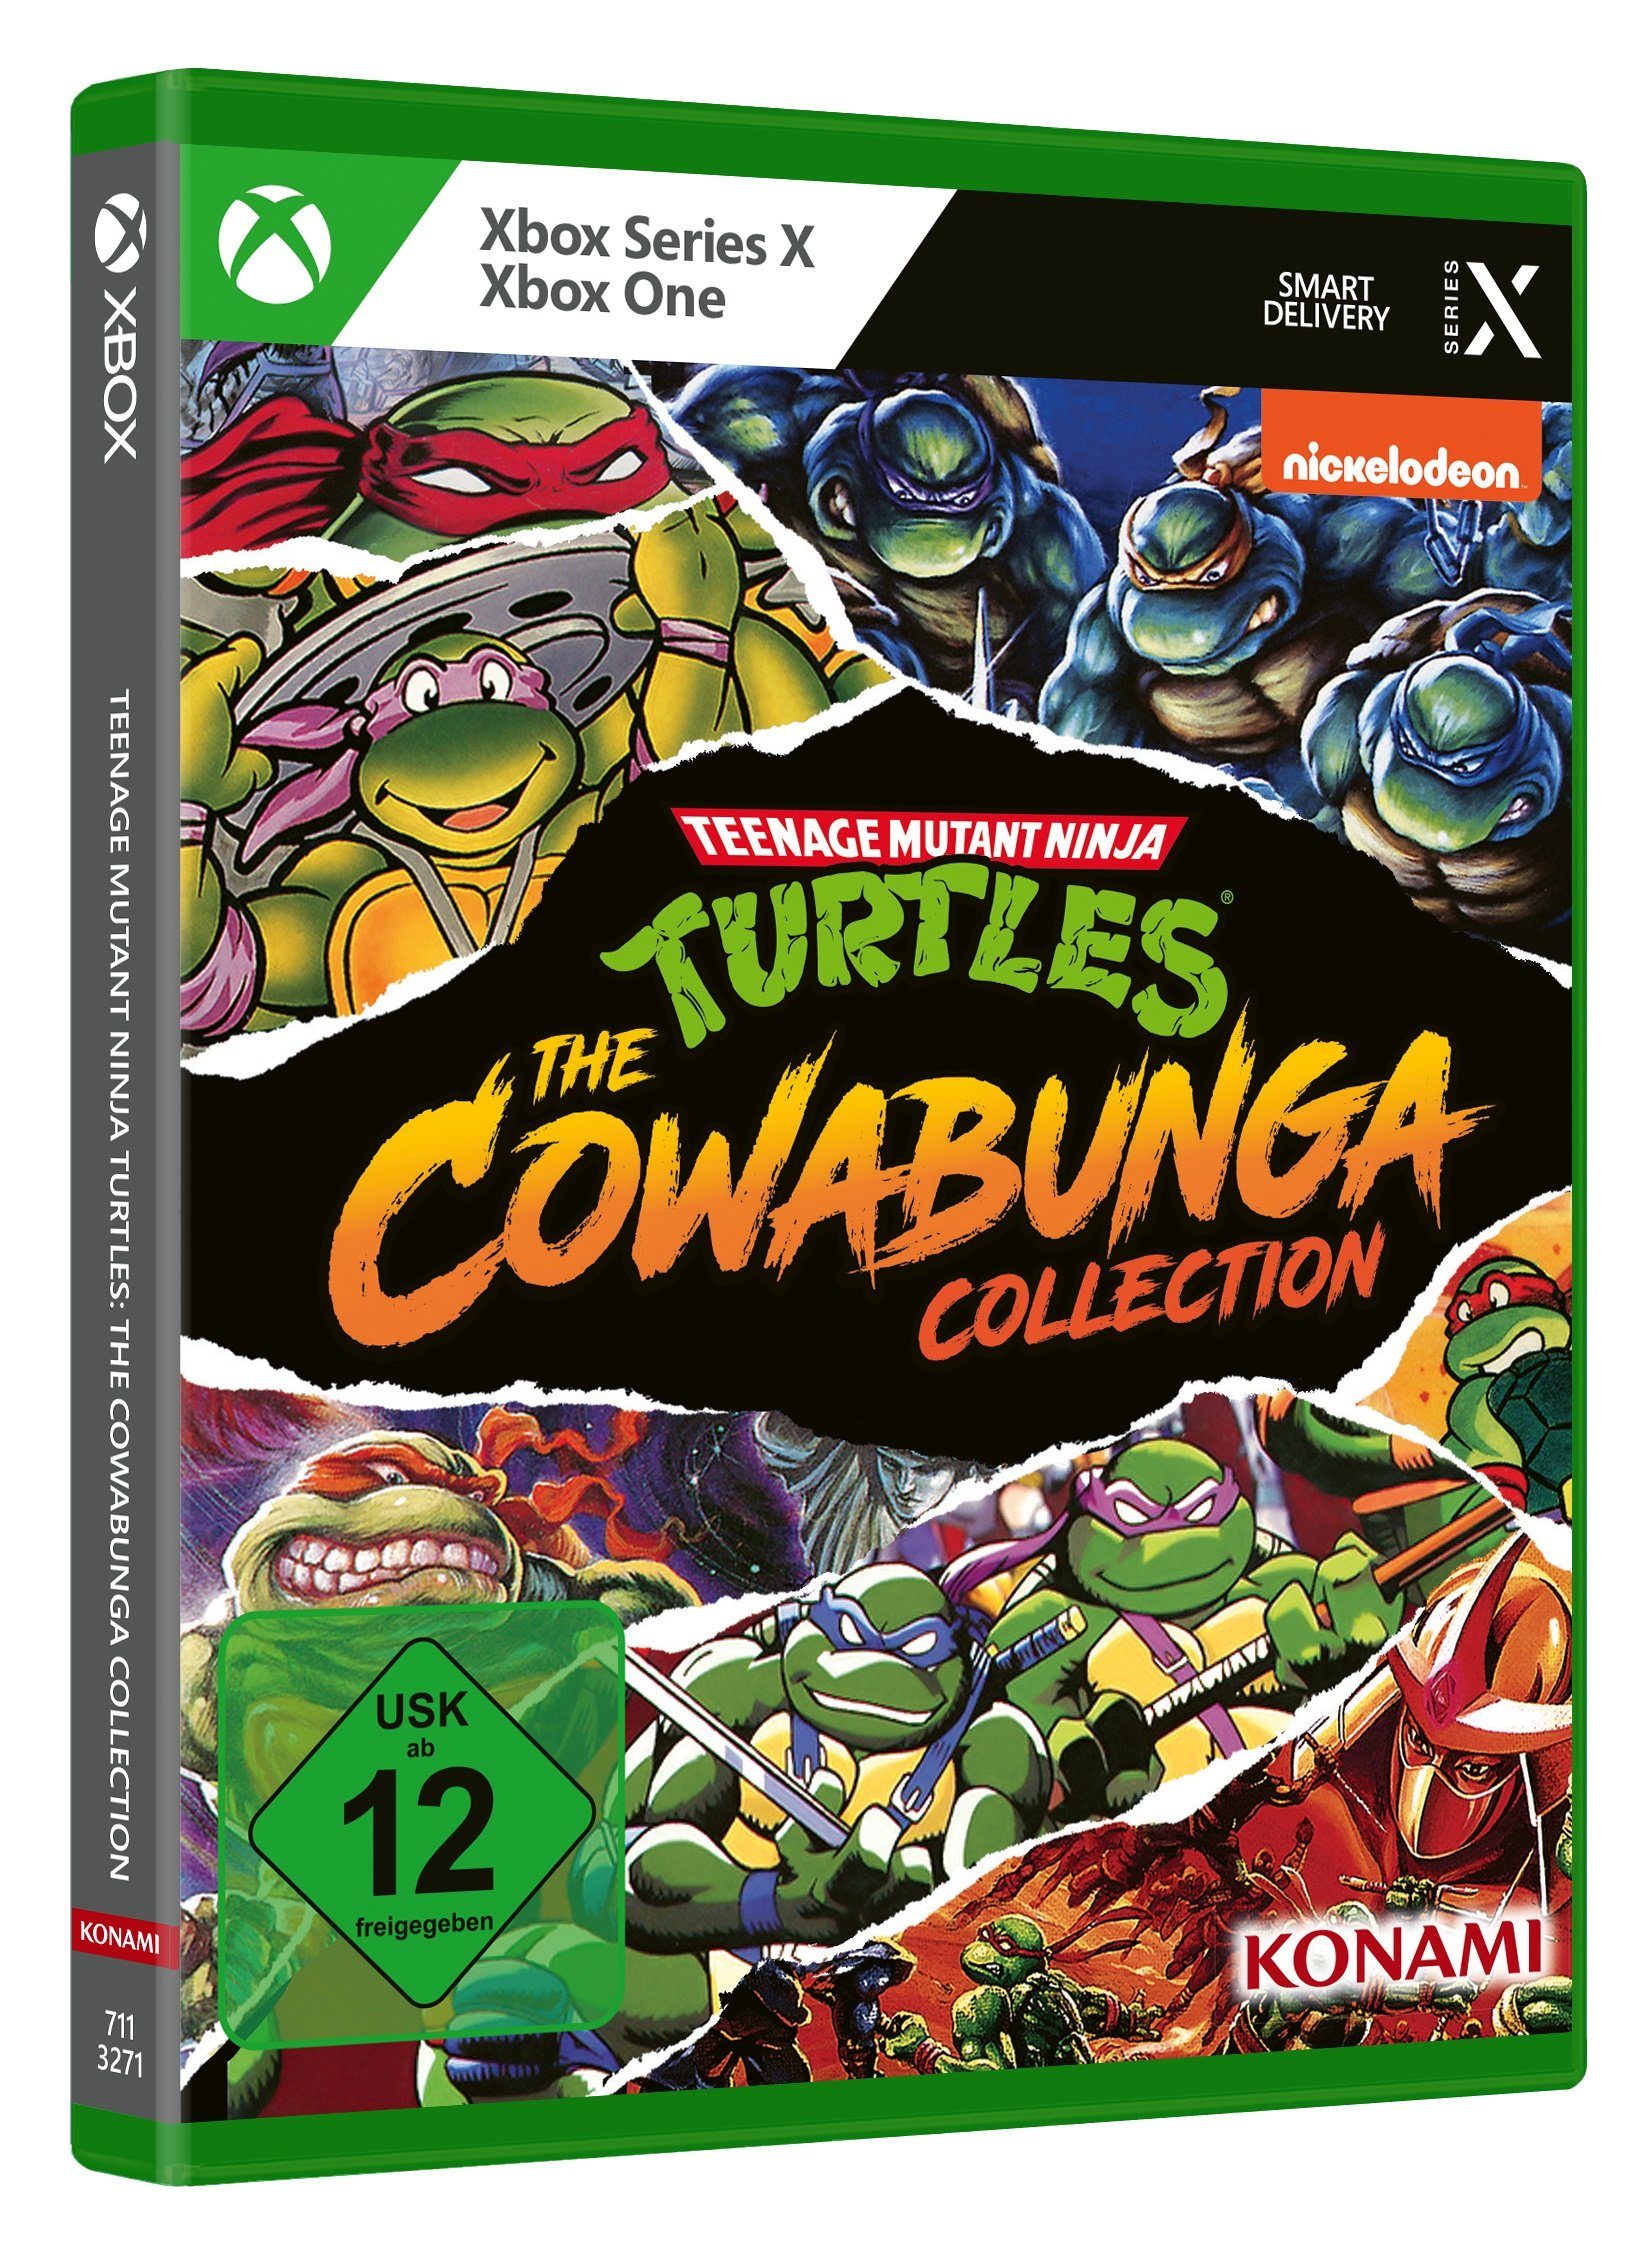 Series Mutant Konami Cowabunga Turtles X - The Teenage Xbox One, Collection Xbox Ninja